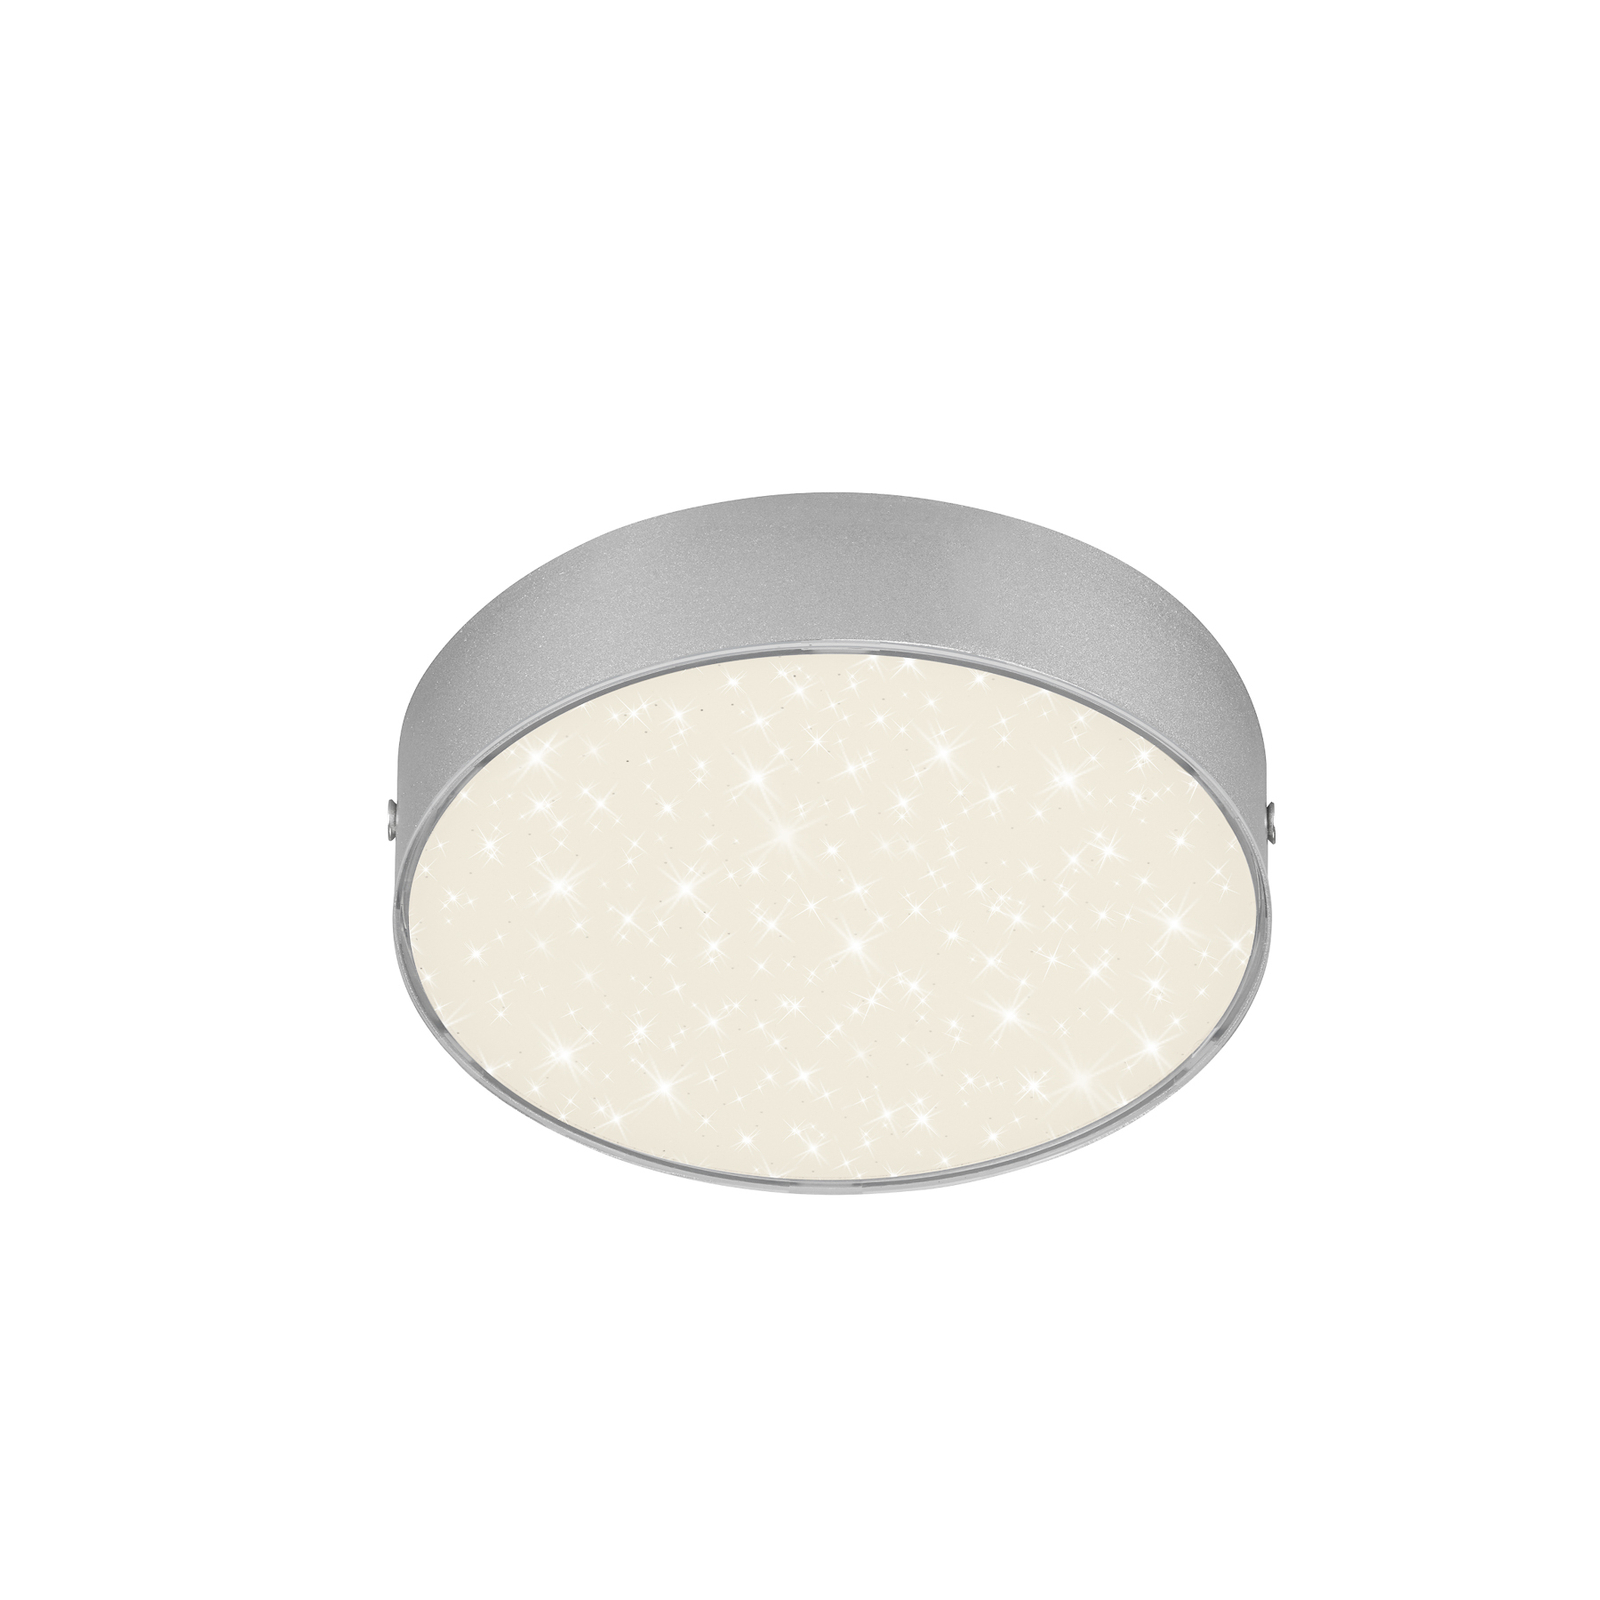 Flame Star LED ceiling light, Ø 15.7 cm, silver